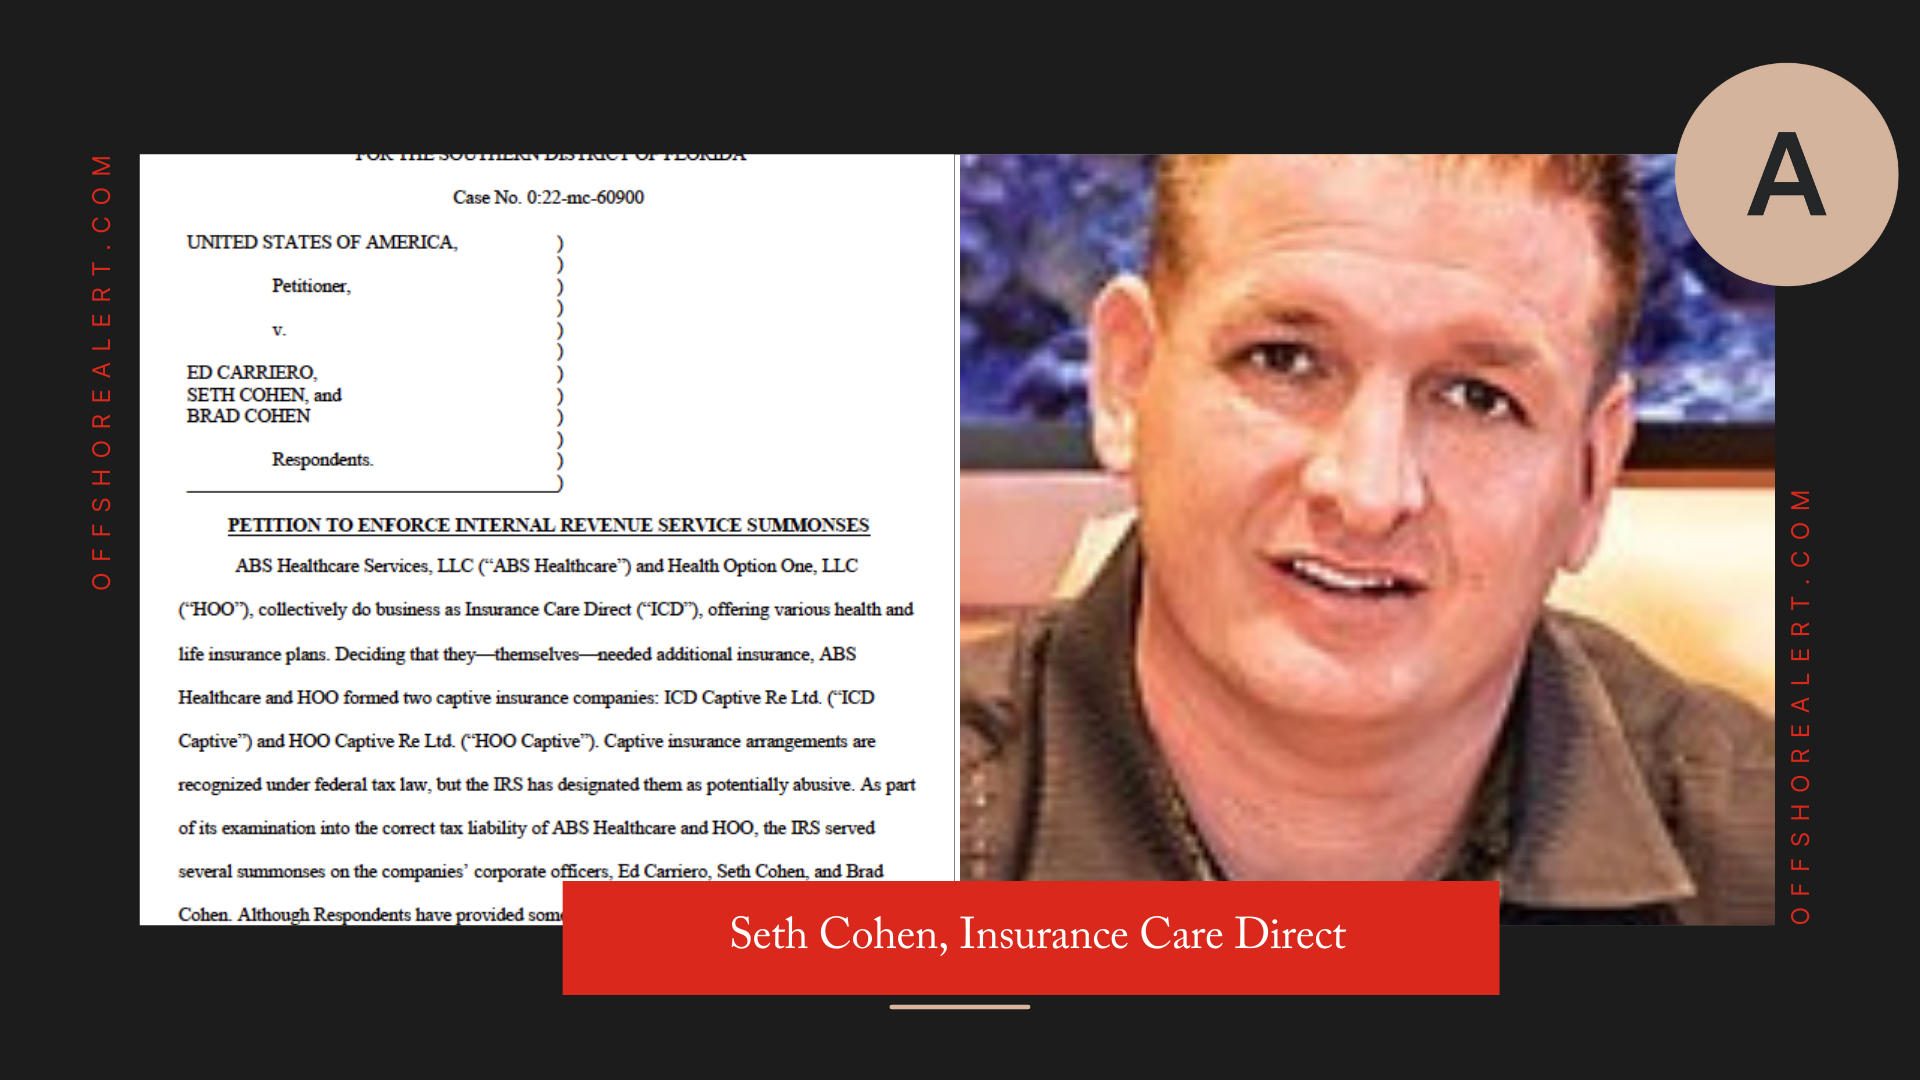 Seth Cohen, Insurance Care Direct